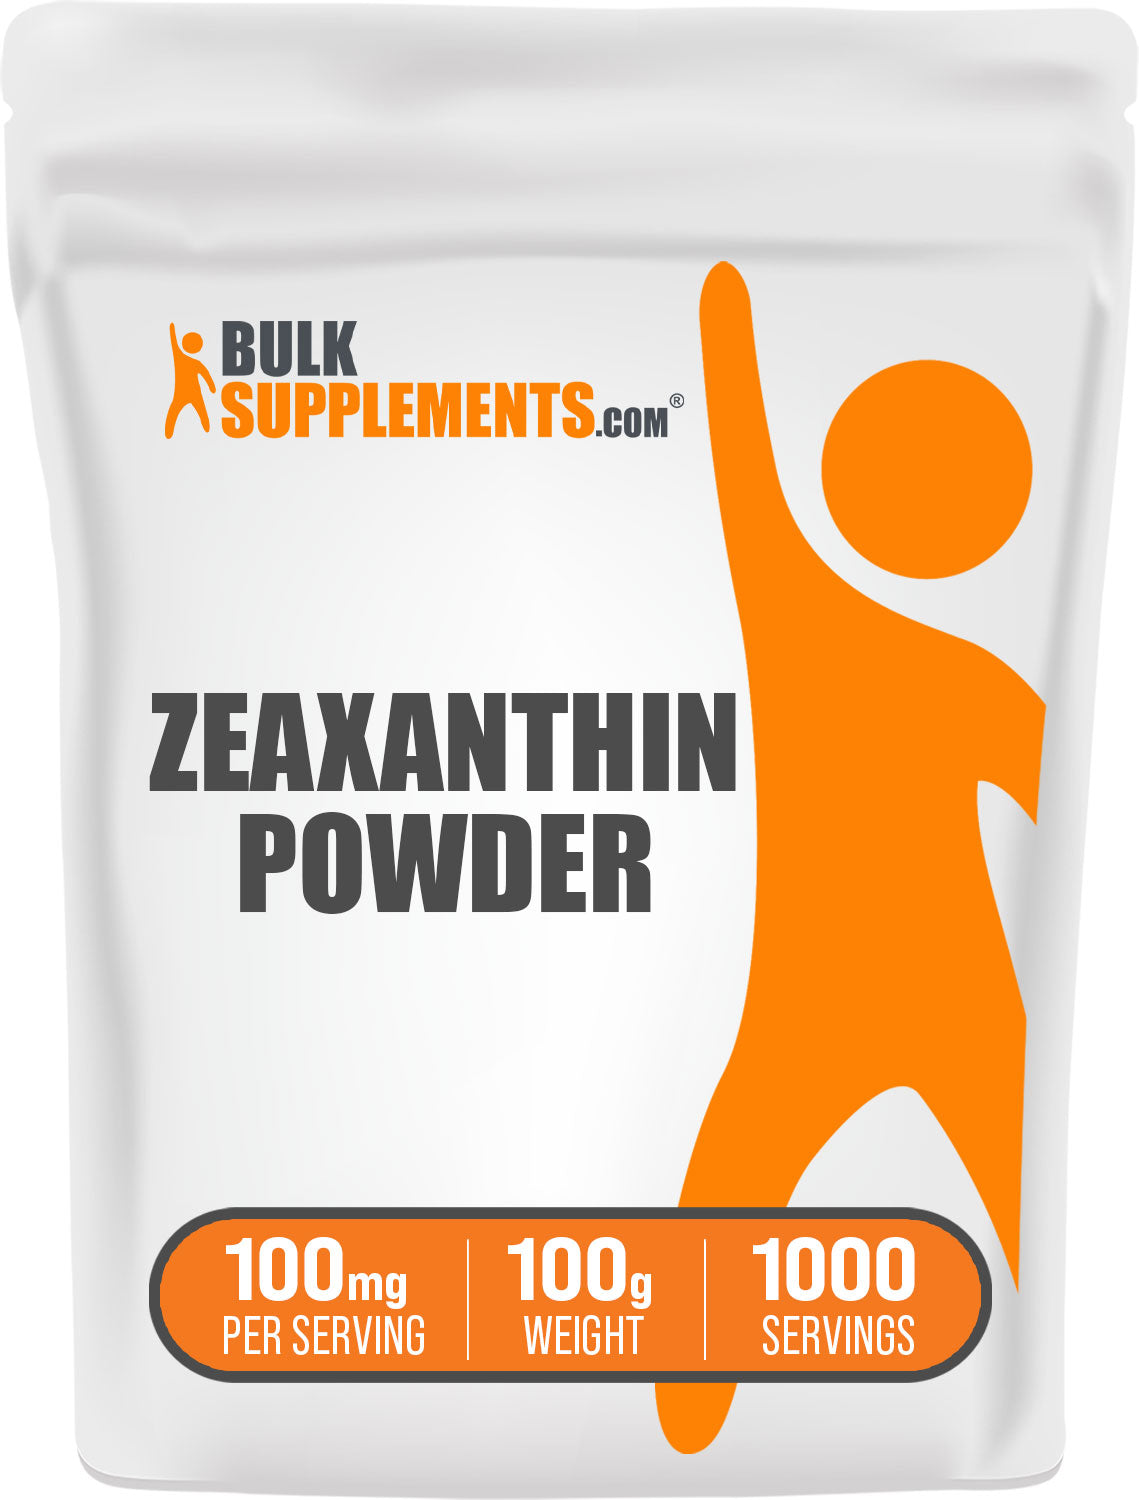 BulkSupplements Zeaxanthin Powder 100g bag